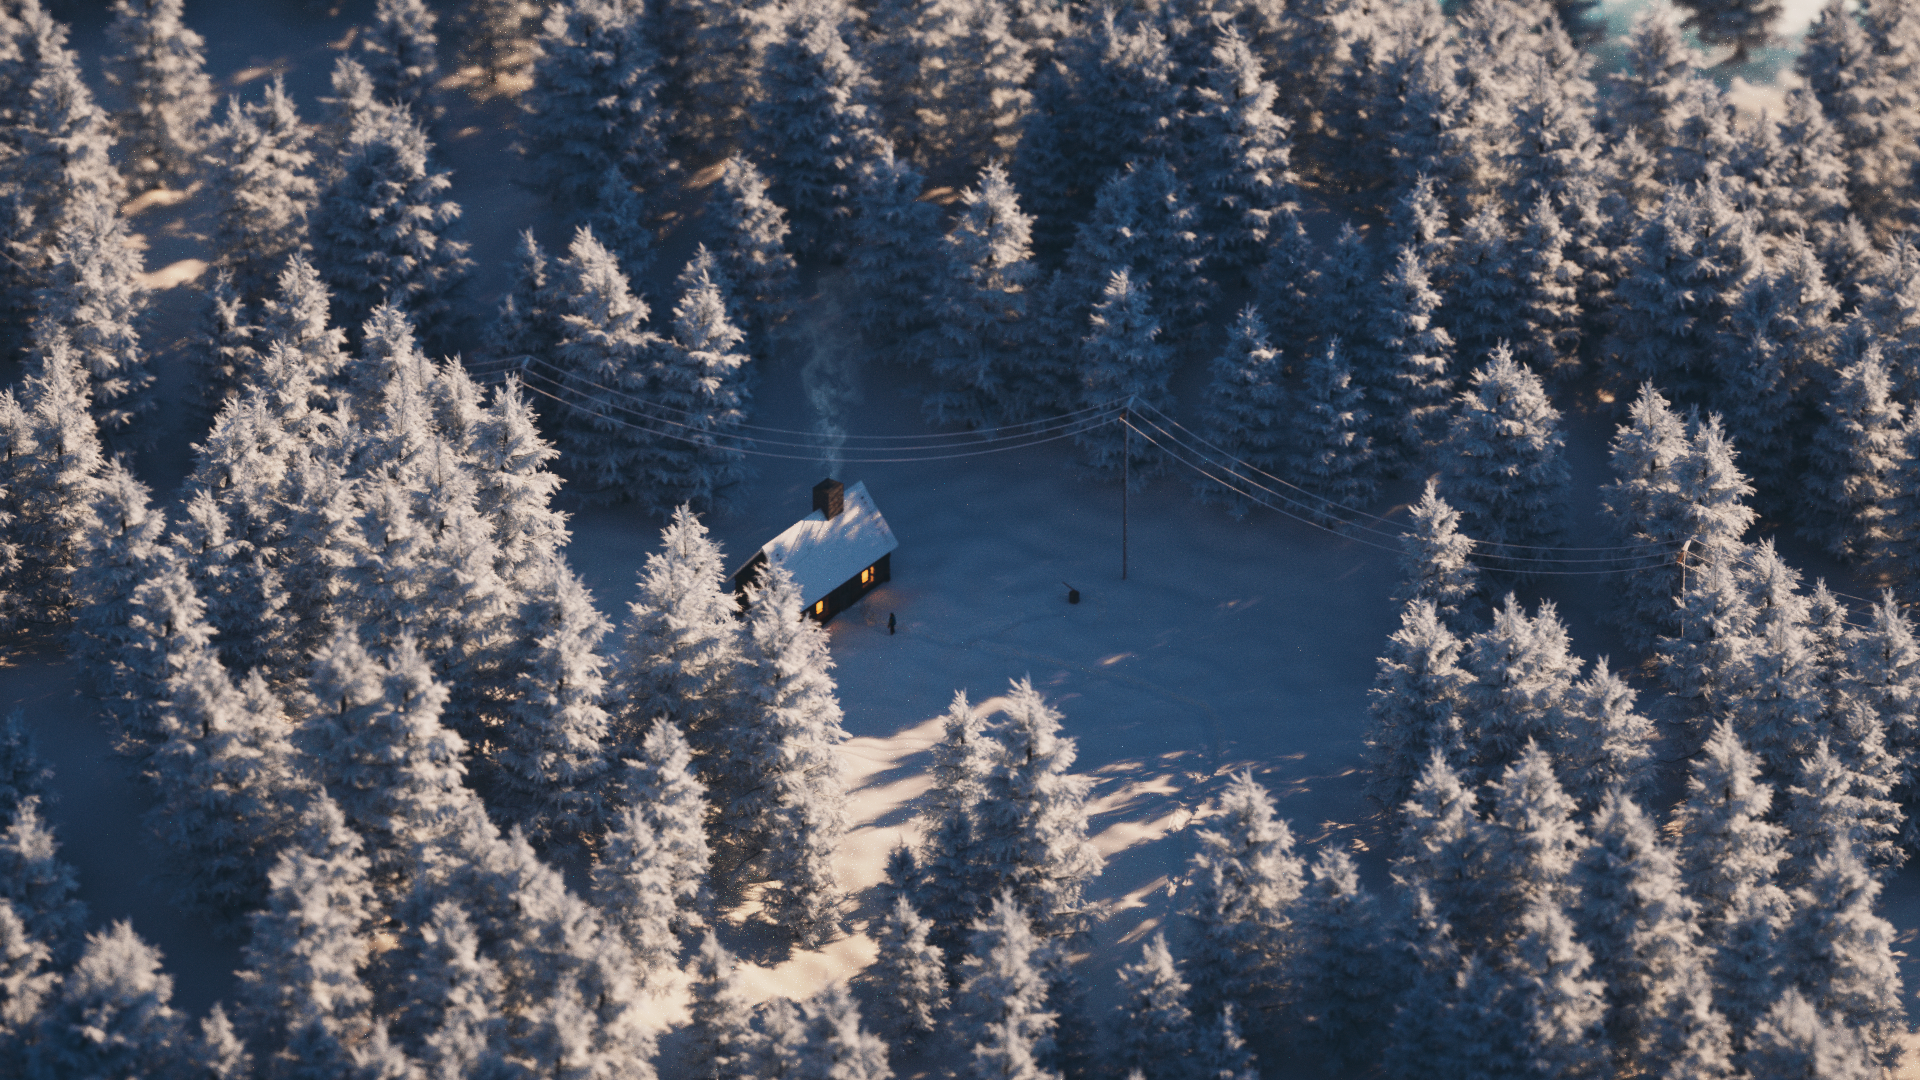 Cinema4D Landscape Winter Forest 1920x1080